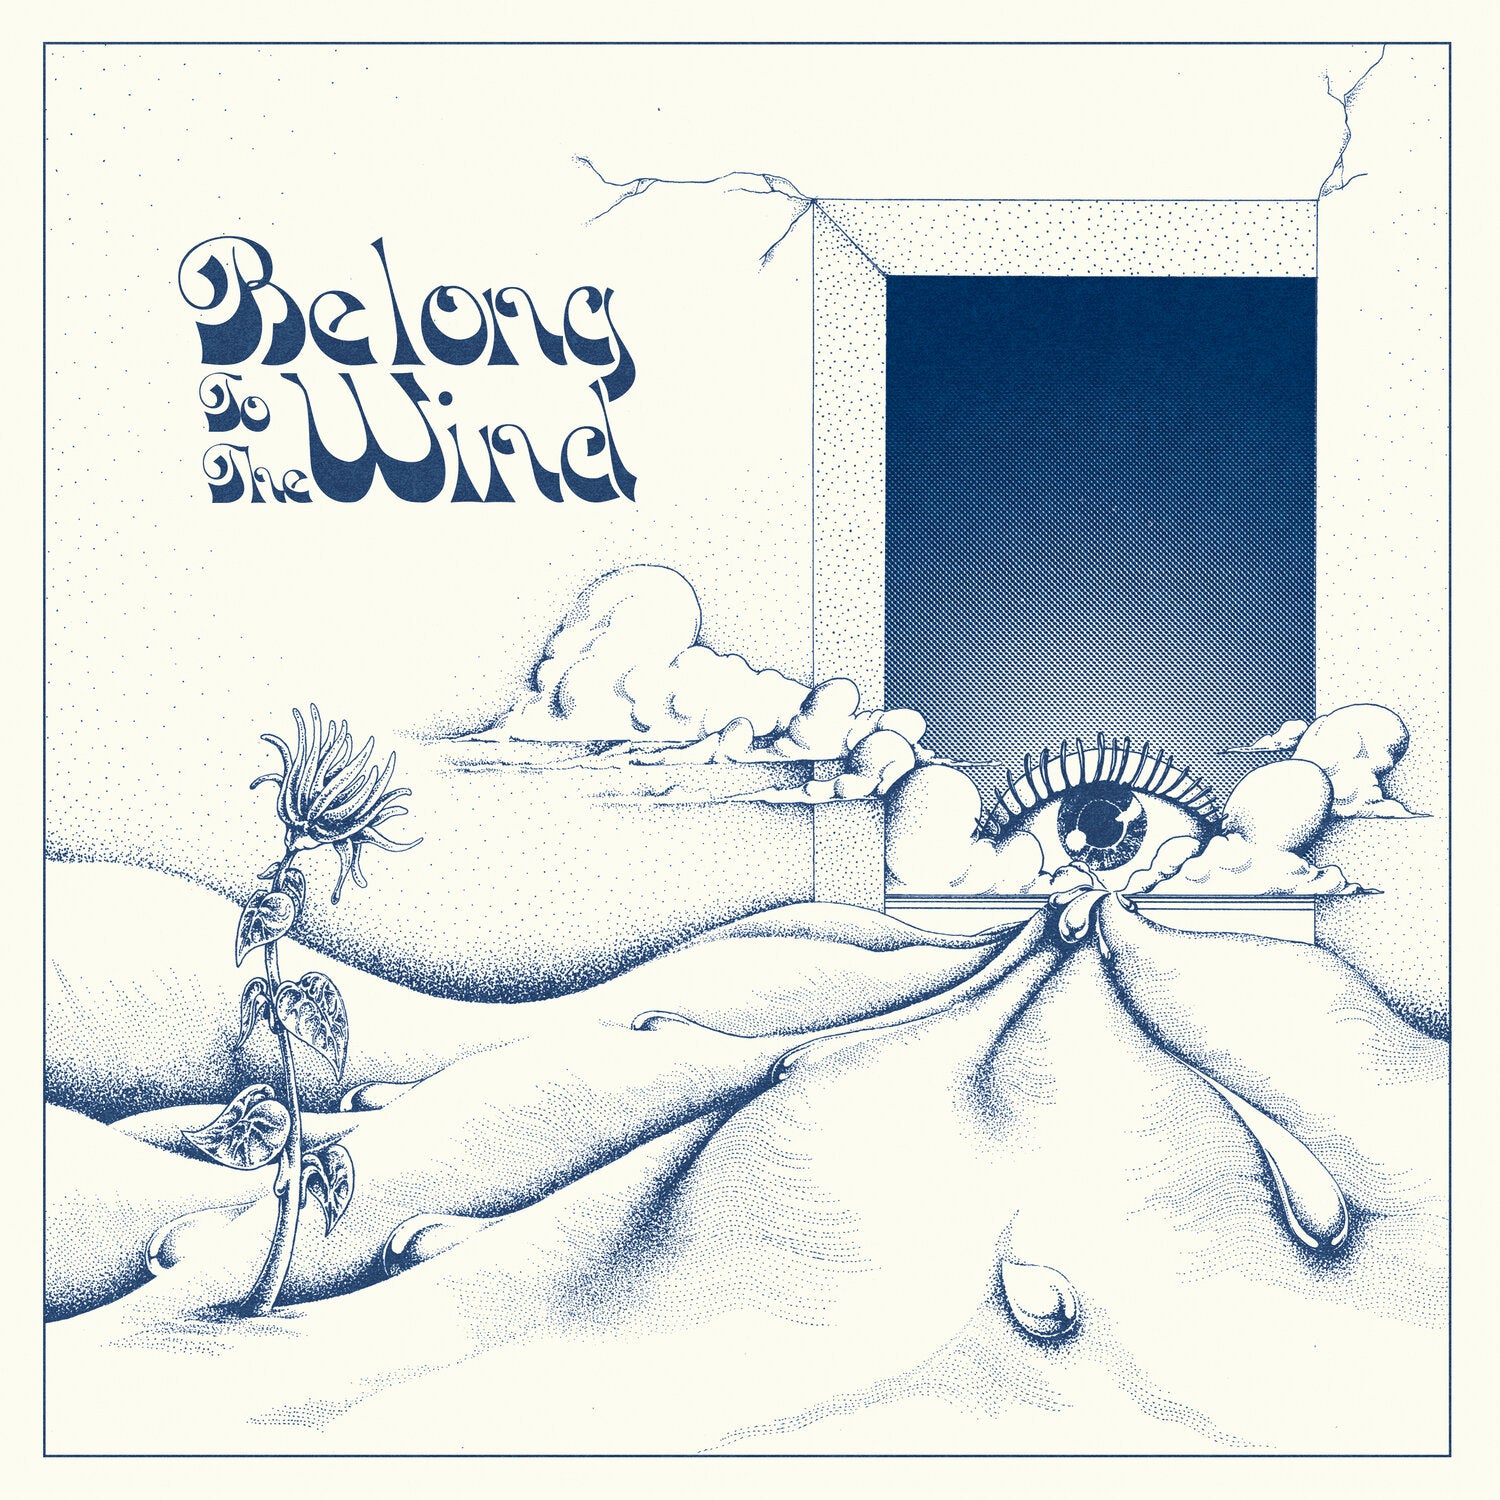 VARIOUS ARTISTS - BELONG TO THE WIND Vinyl LP